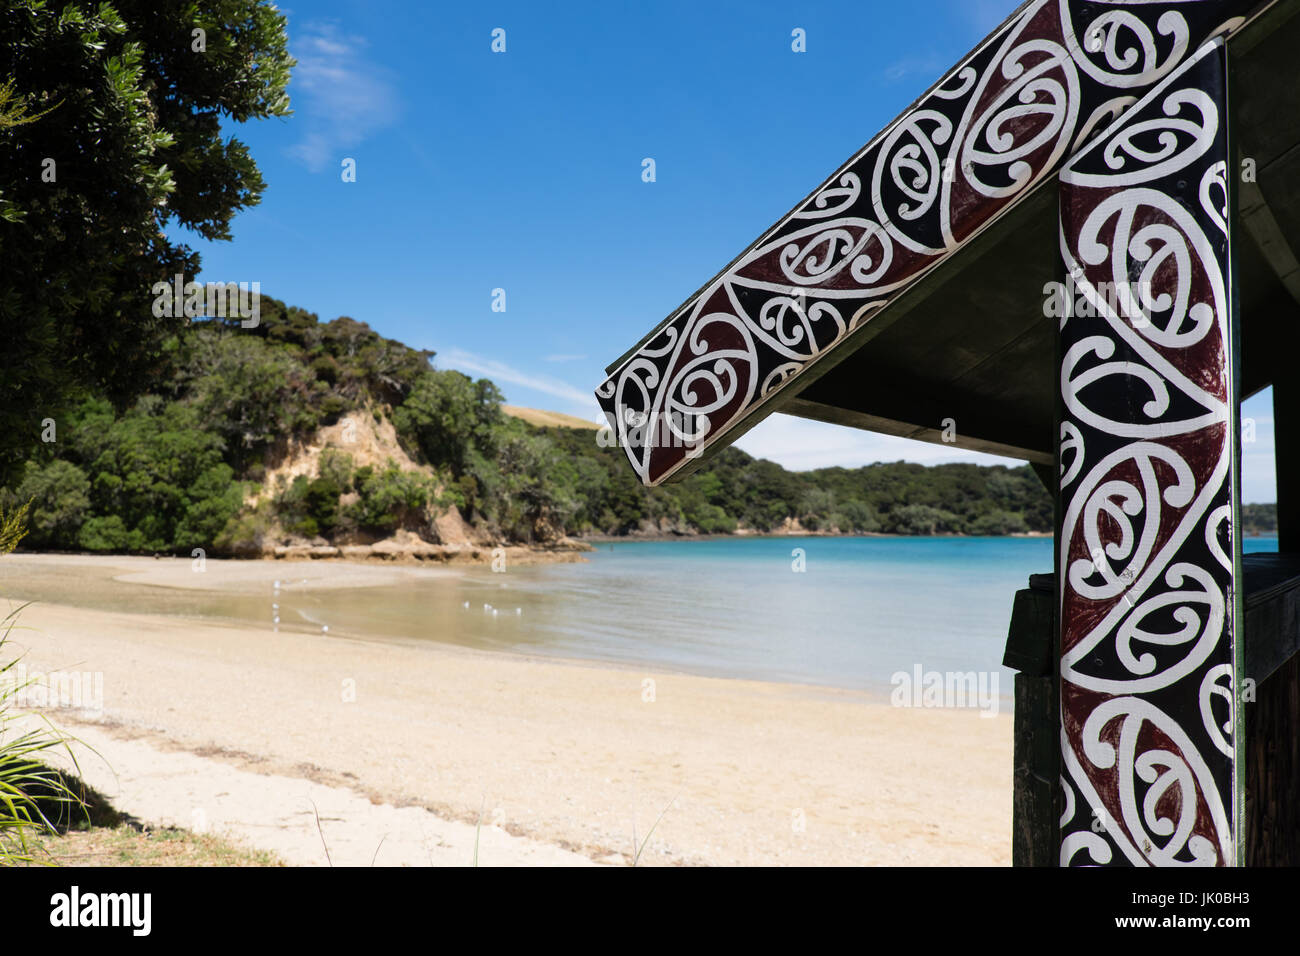 Urupukapuka Island, la Baia delle Isole, Nuova Zelanda, Nuova Zelanda - 1 Febbraio 2017: arte Maori da una spiaggia di sabbia bianca. Foto Stock